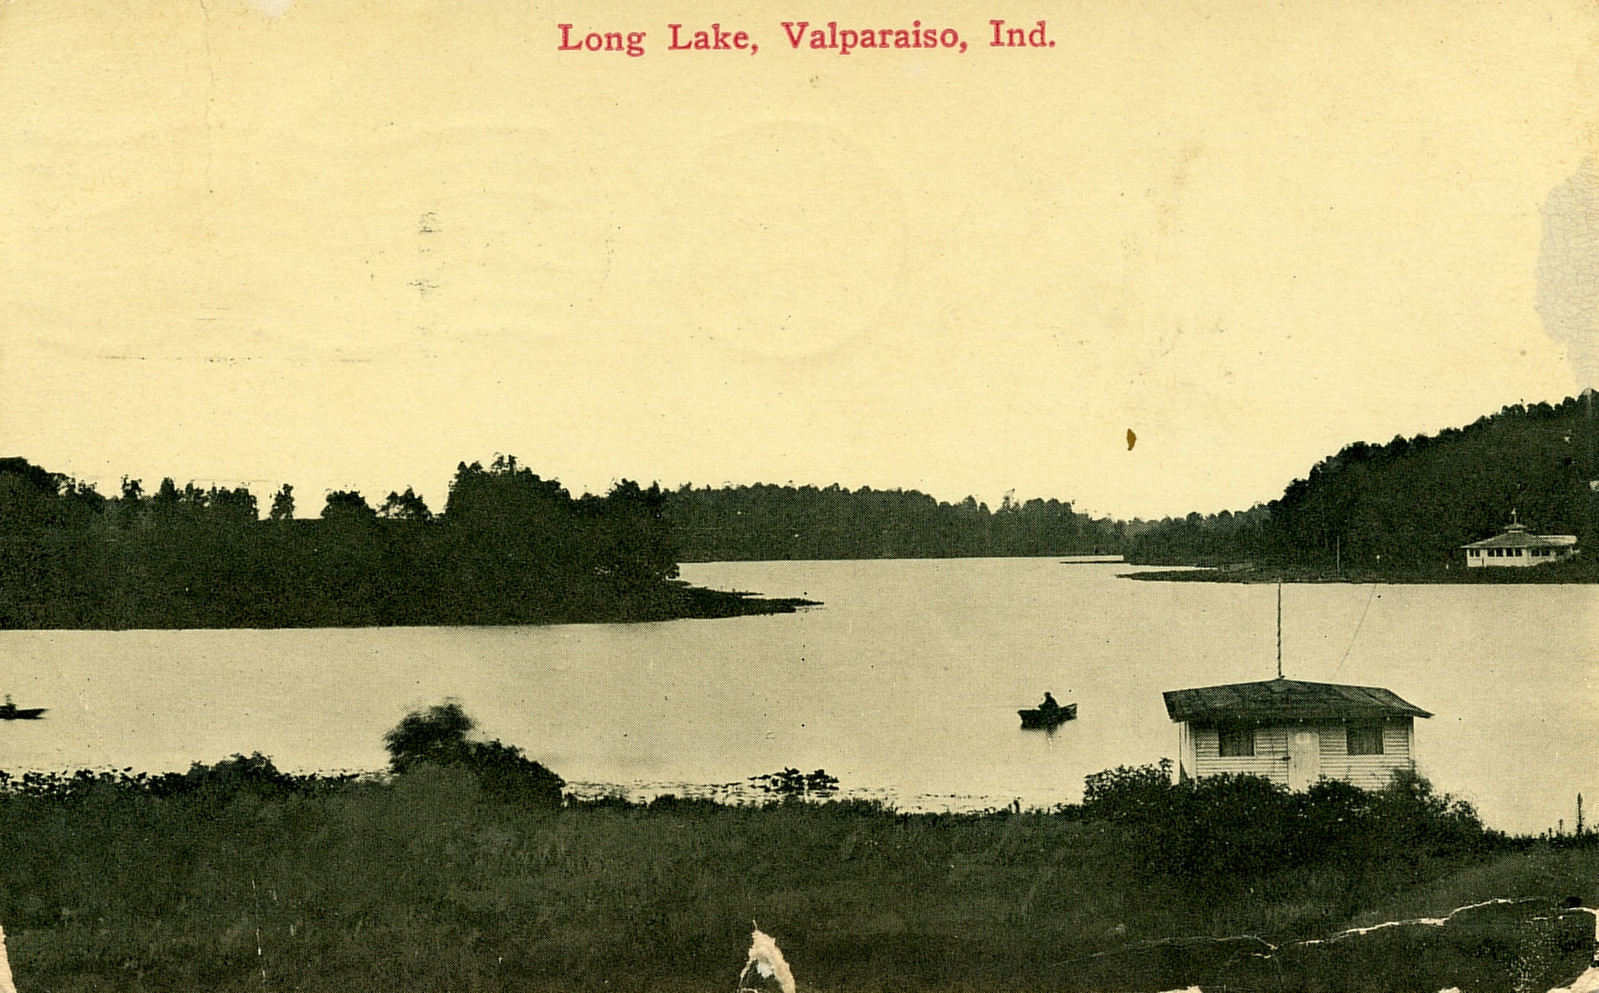 Long Lake, circa 1915 - Valparaiso, Indiana